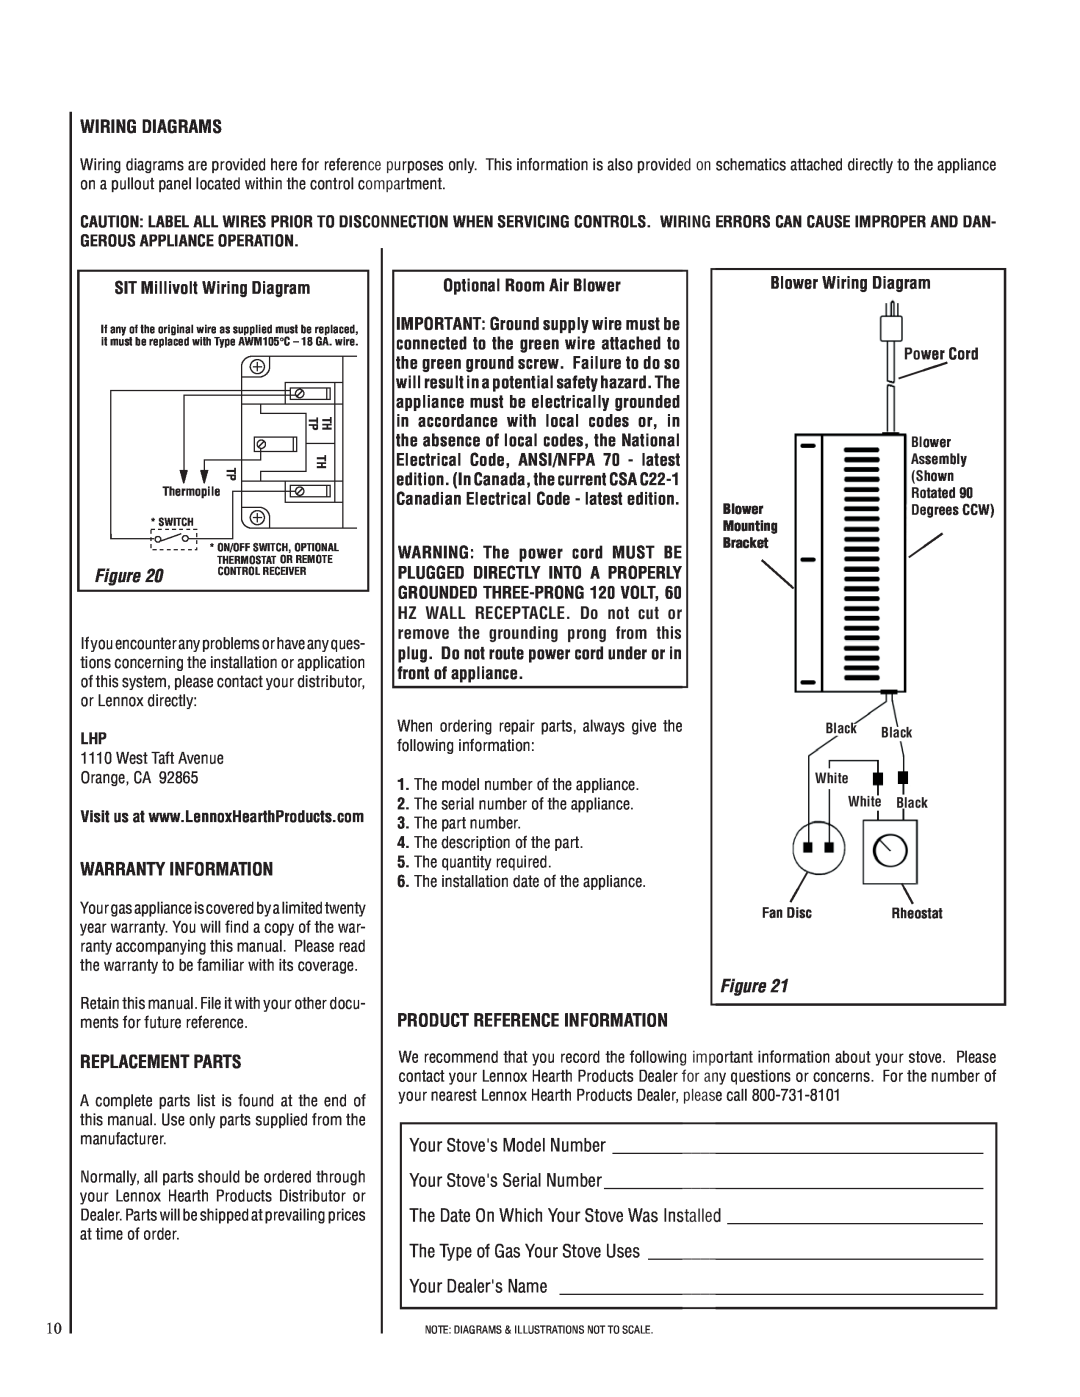 Lennox Hearth CI2500DVF Wiring Diagrams, SIT Millivolt Wiring Diagram, Warranty Information, Optional Room Air Blower 